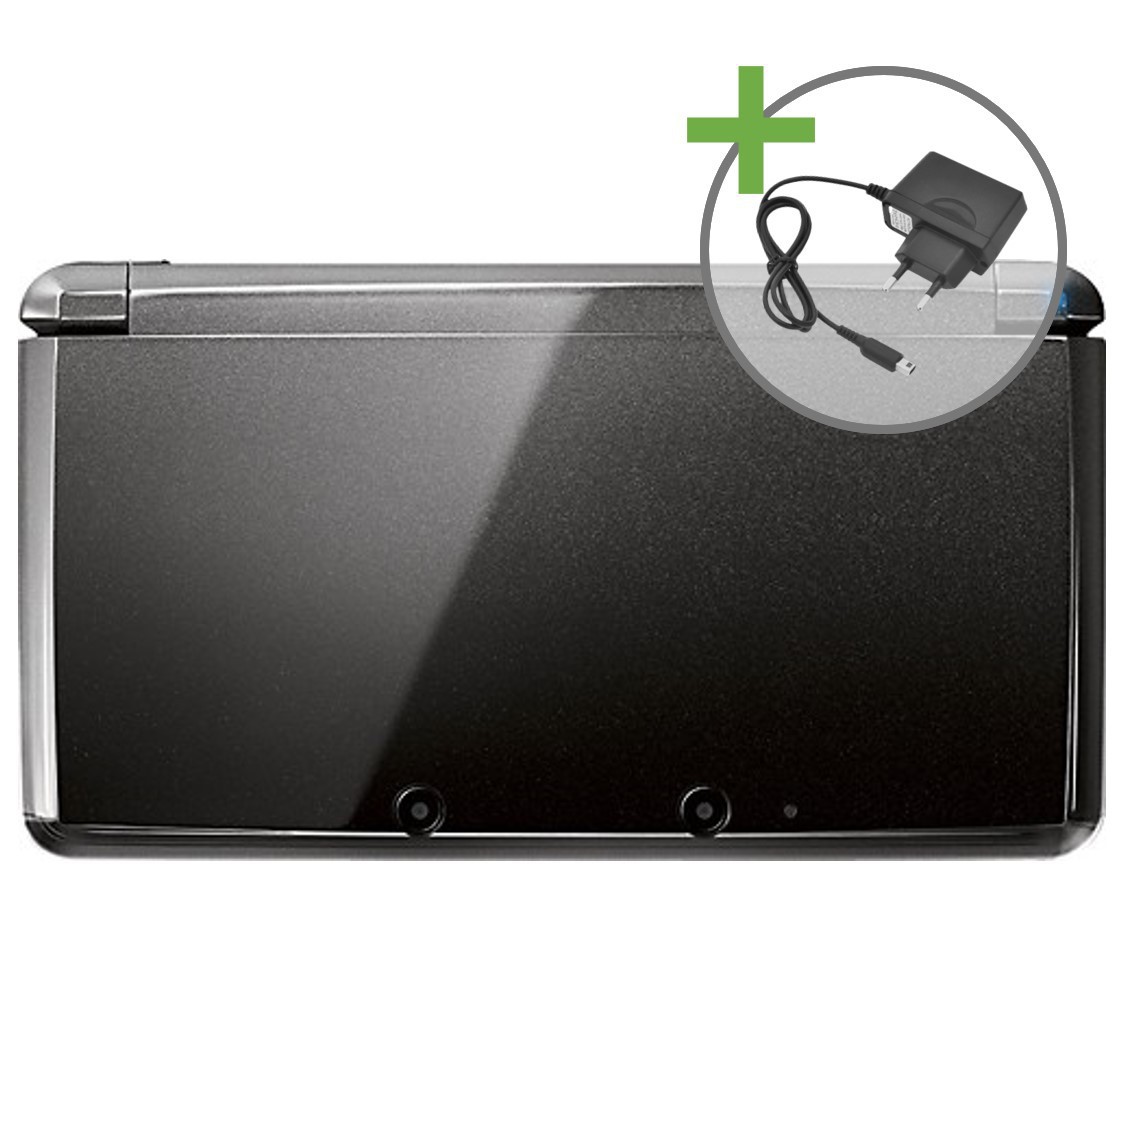 Nintendo 3DS Cosmos Black [Complete] - Nintendo 3DS Hardware - 4